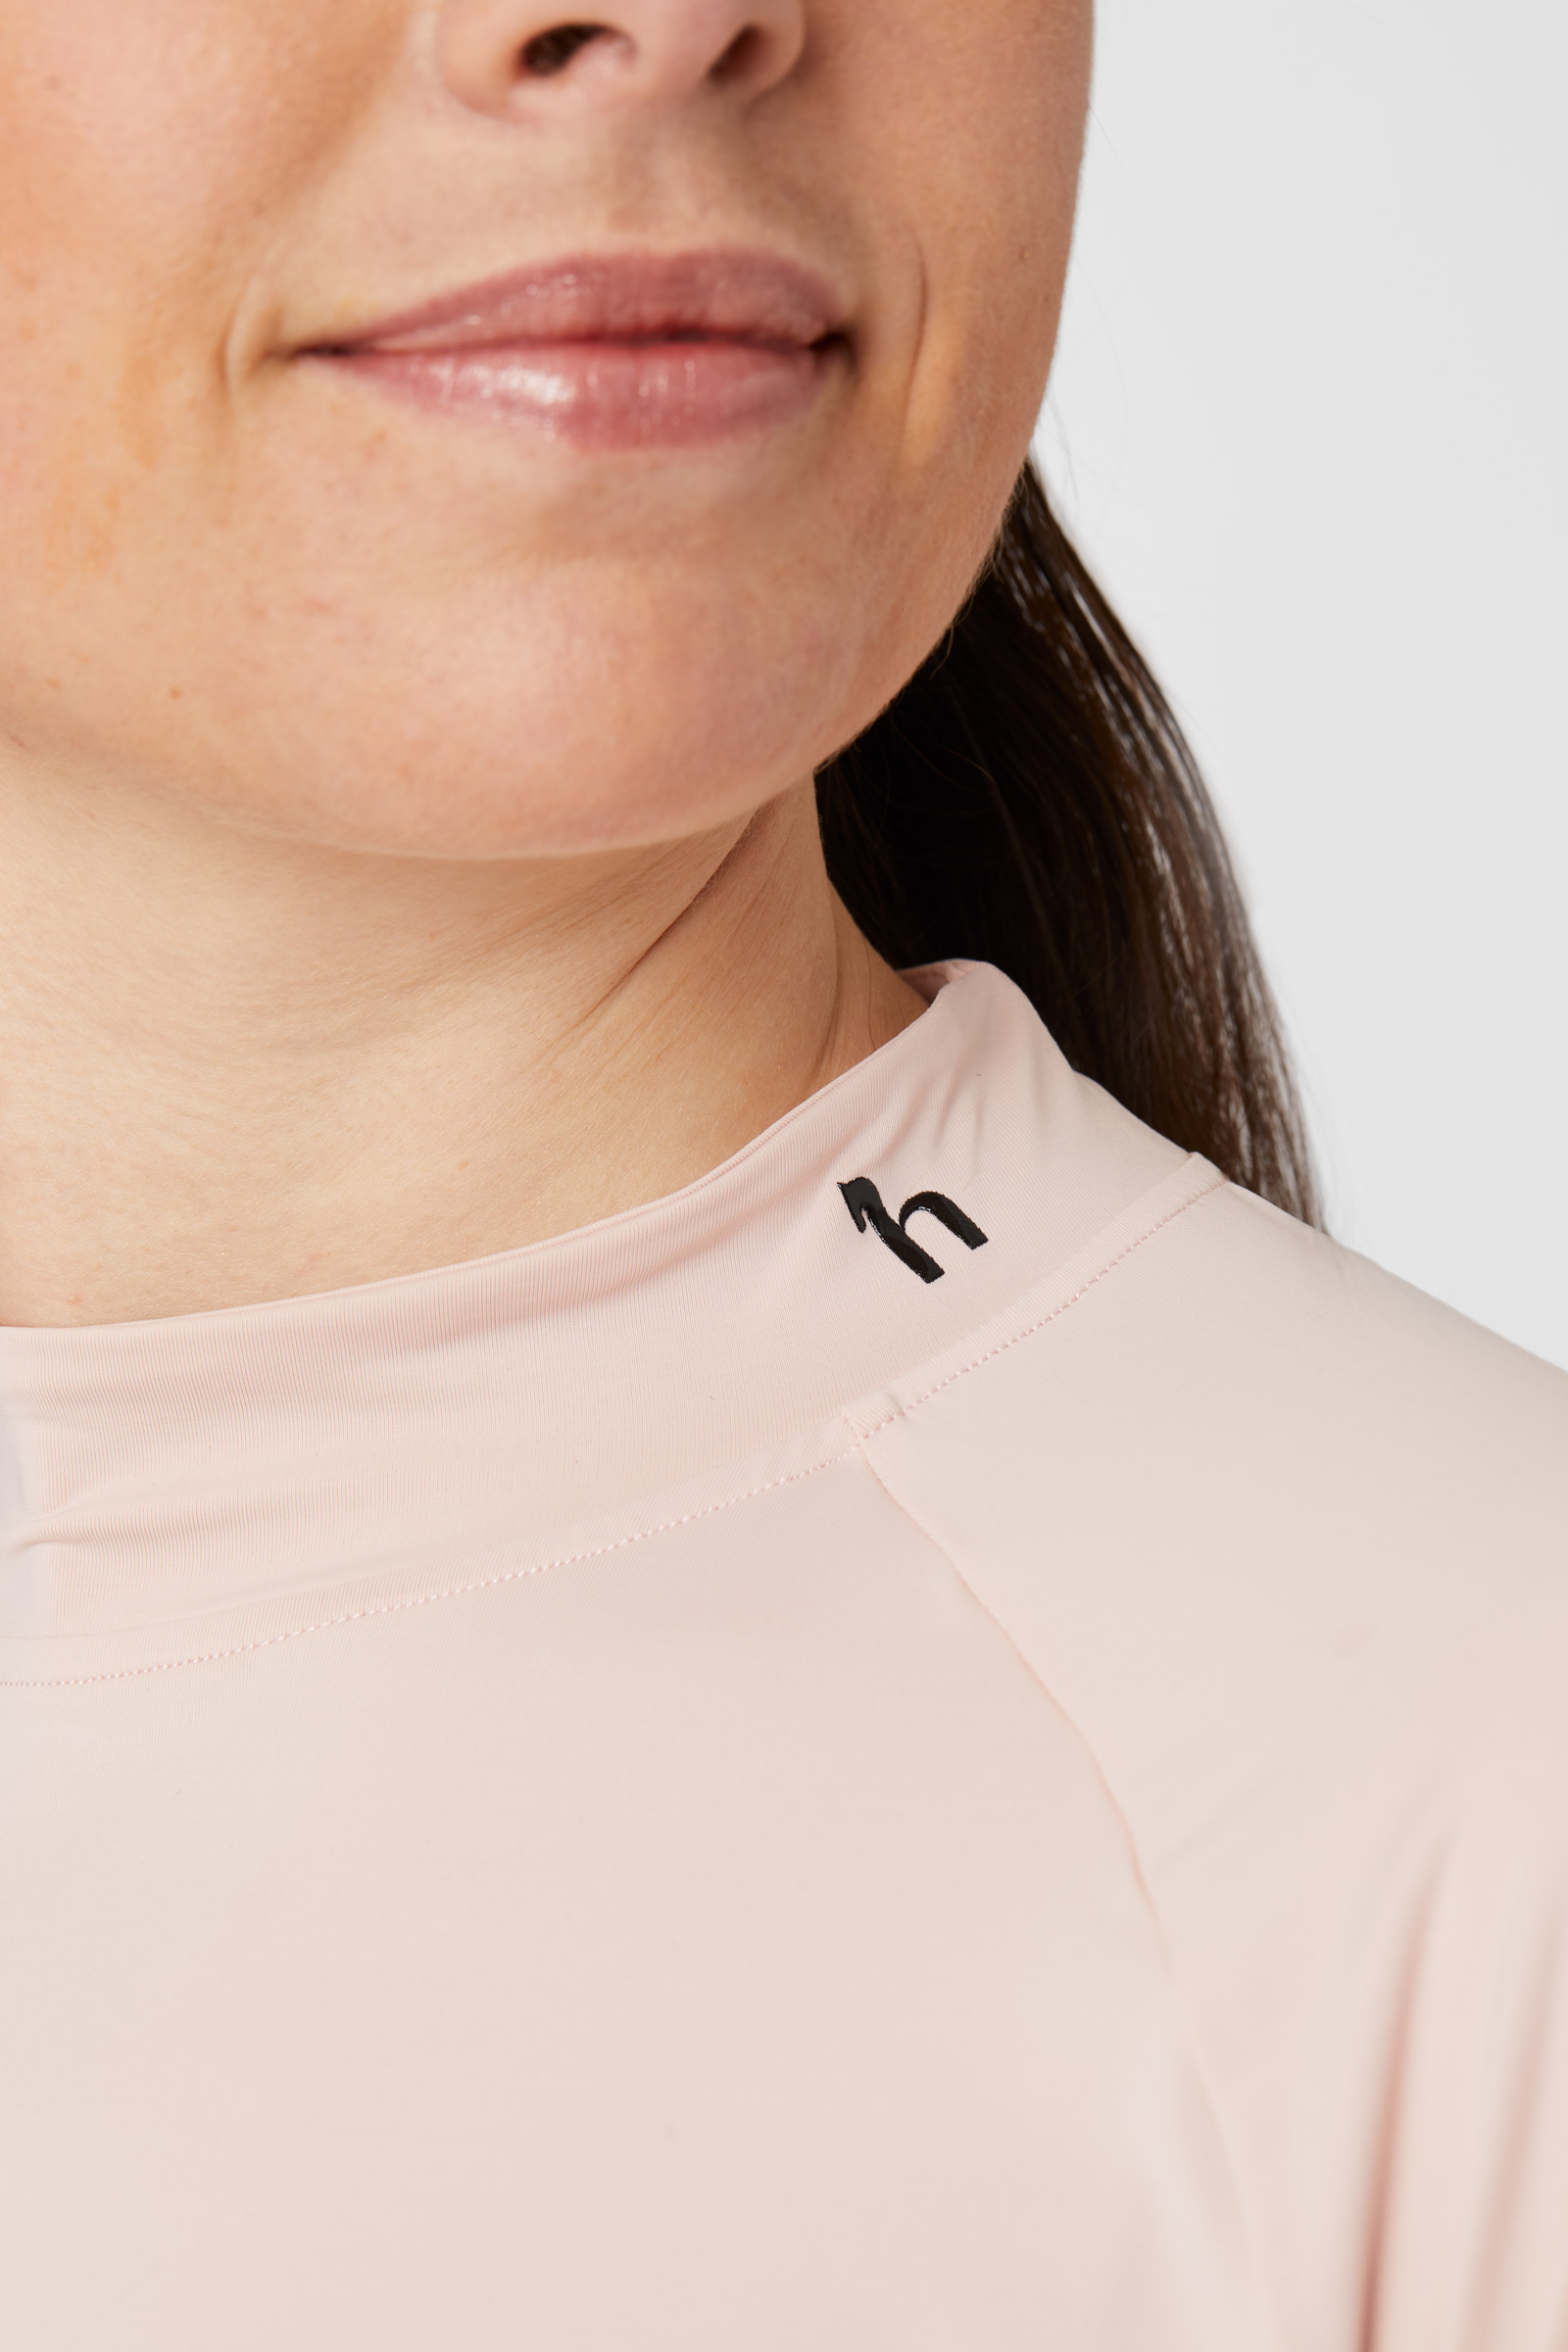 Buy Horze Gabriela Women's Training Shirt with UV Protection